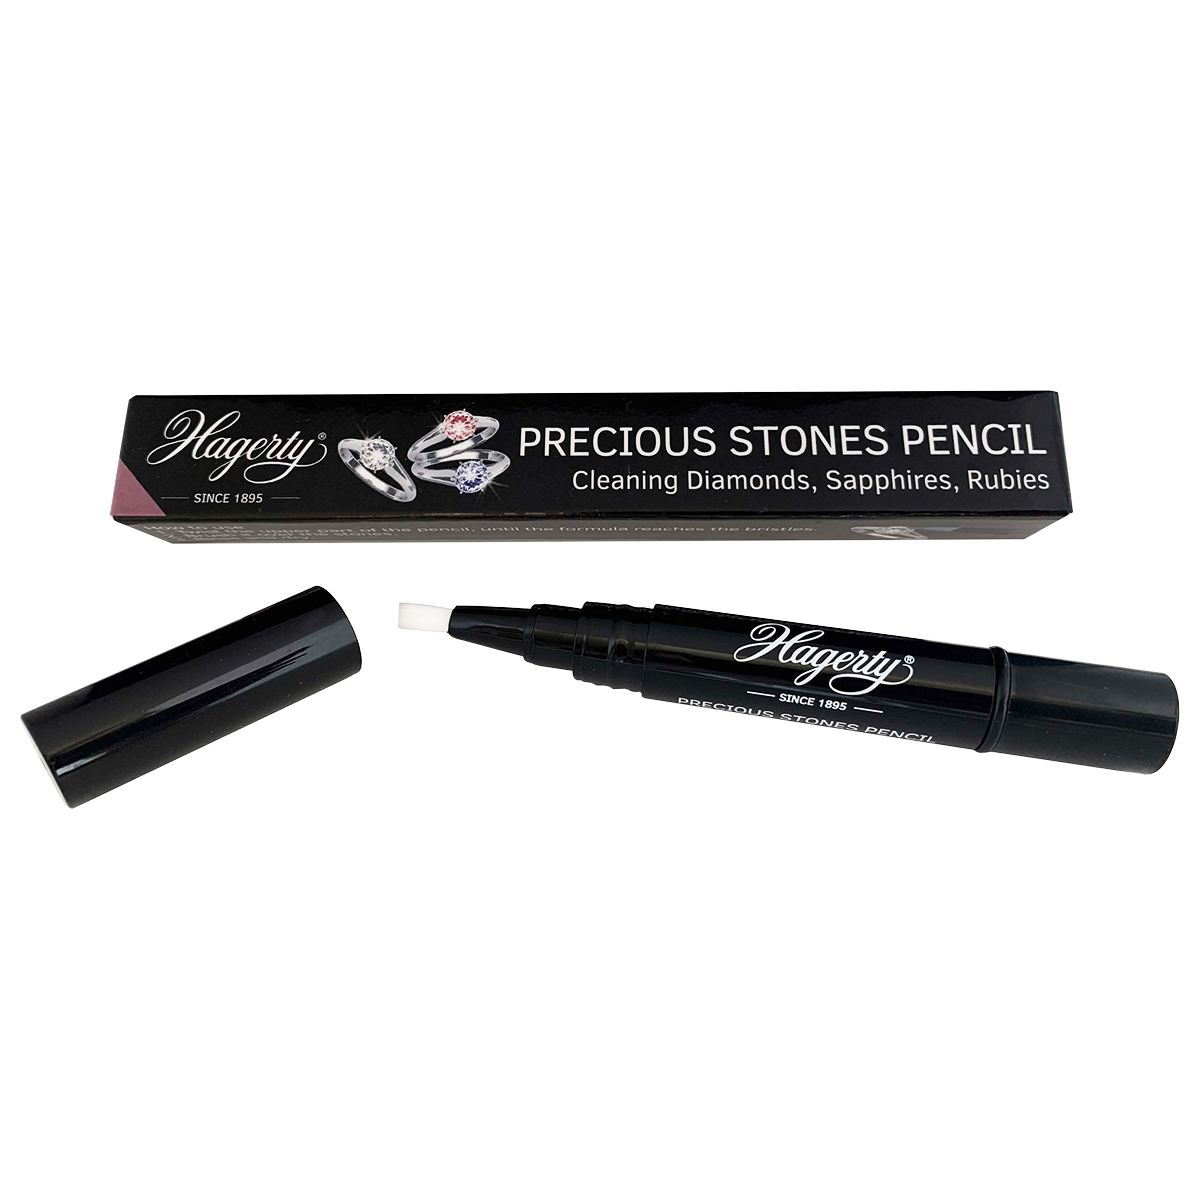 Hagerty Precious Stones Pencil, Schmuckpflegestift für Juwelen